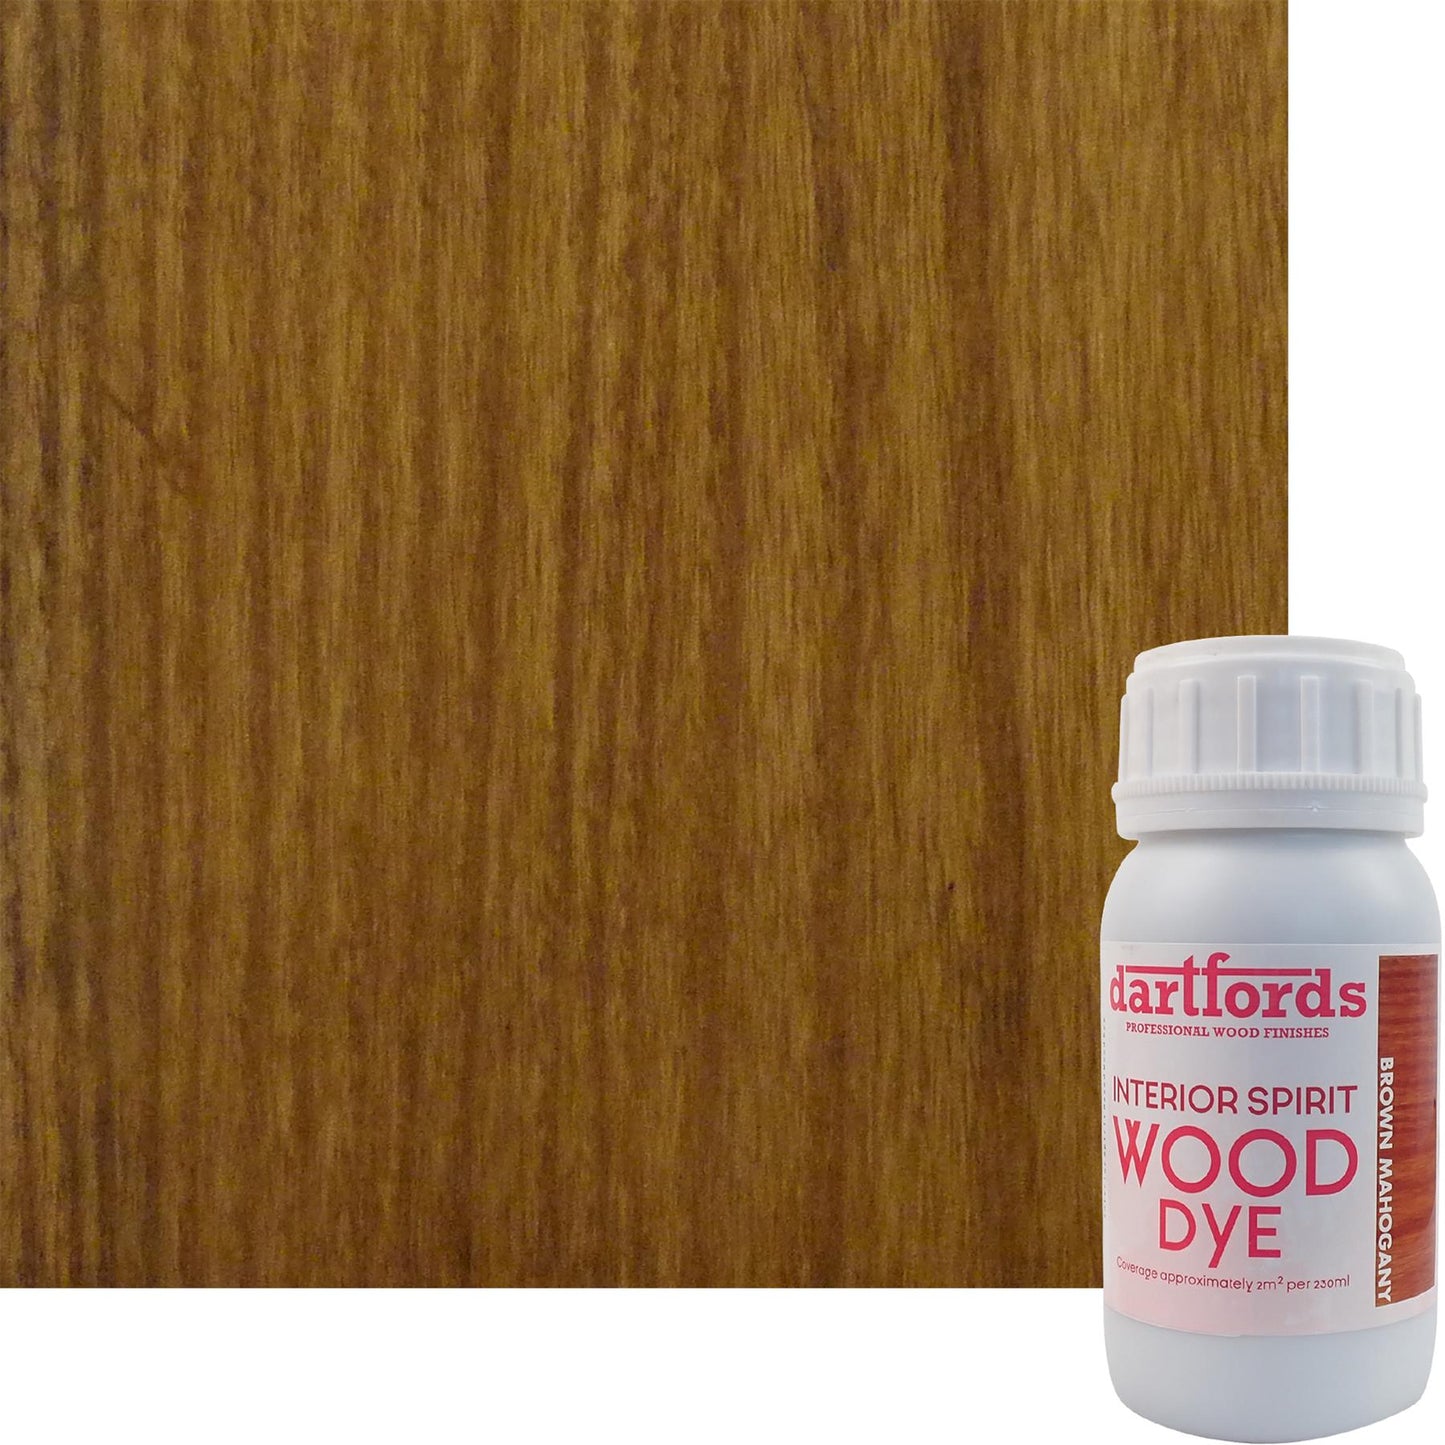 dartfords Brown Mahogany Interior Spirit Based Wood Dye - 230ml Tin